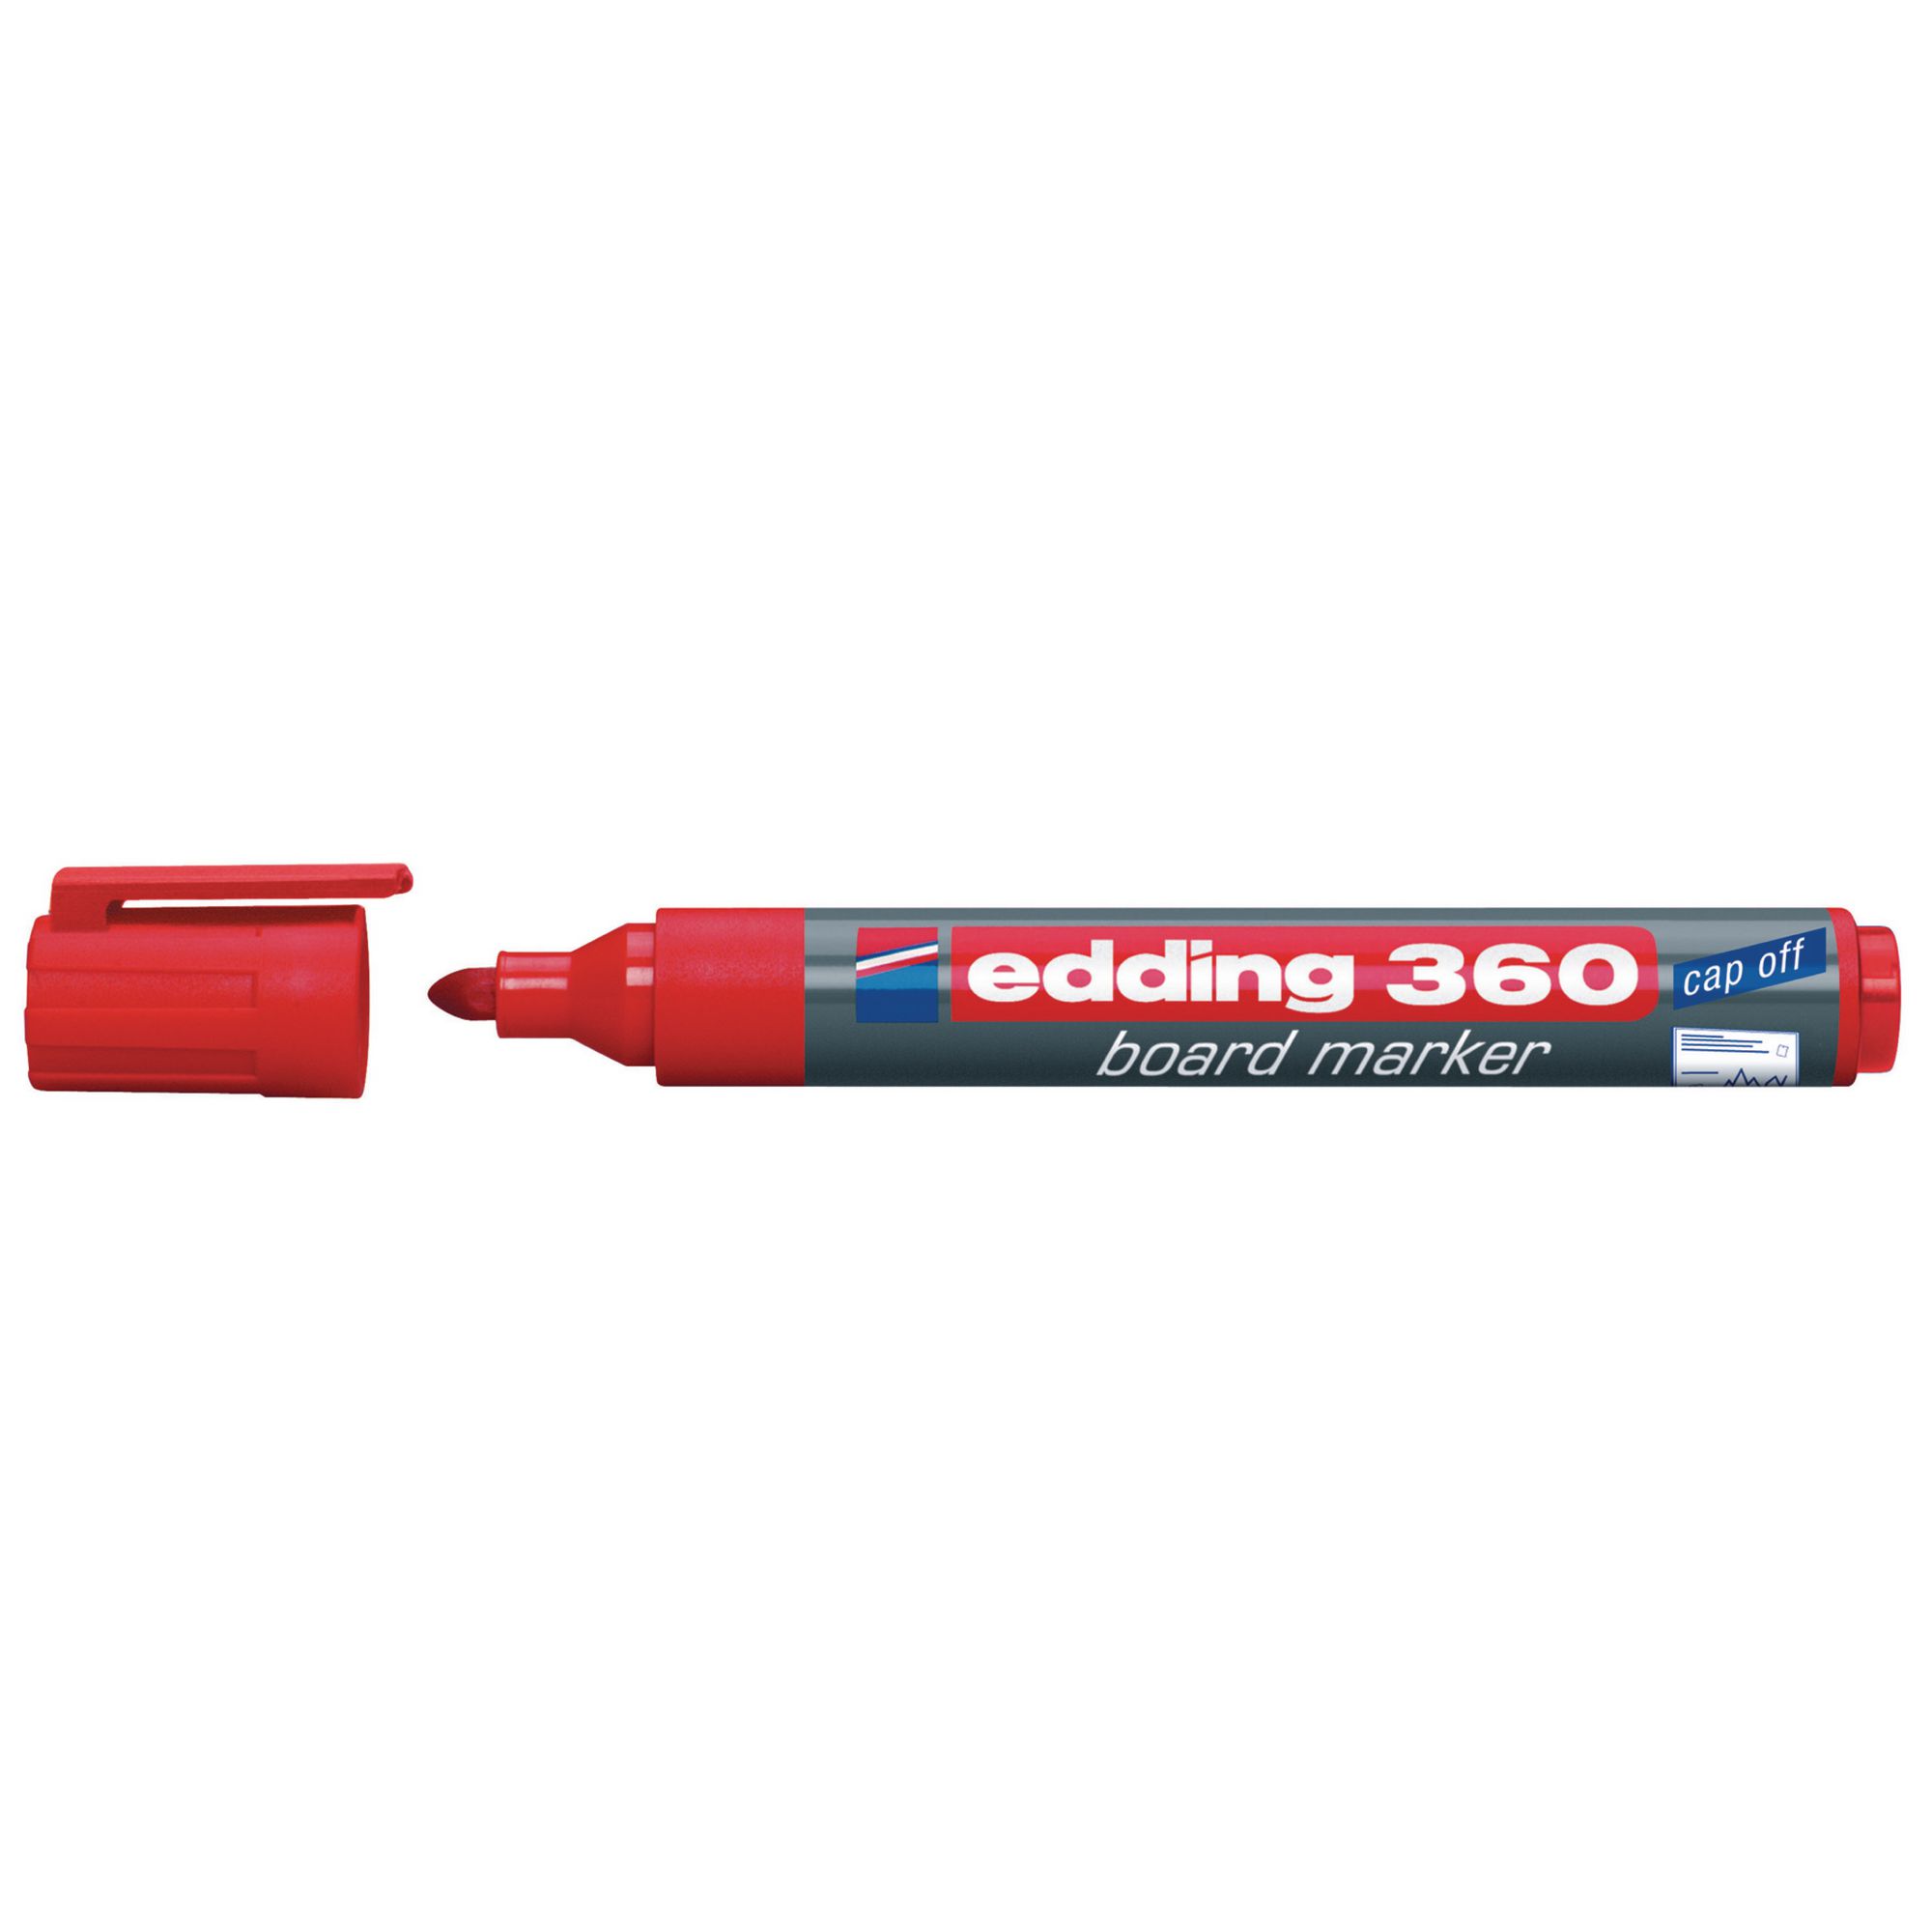 Edding 360 Boardmarker Redx10